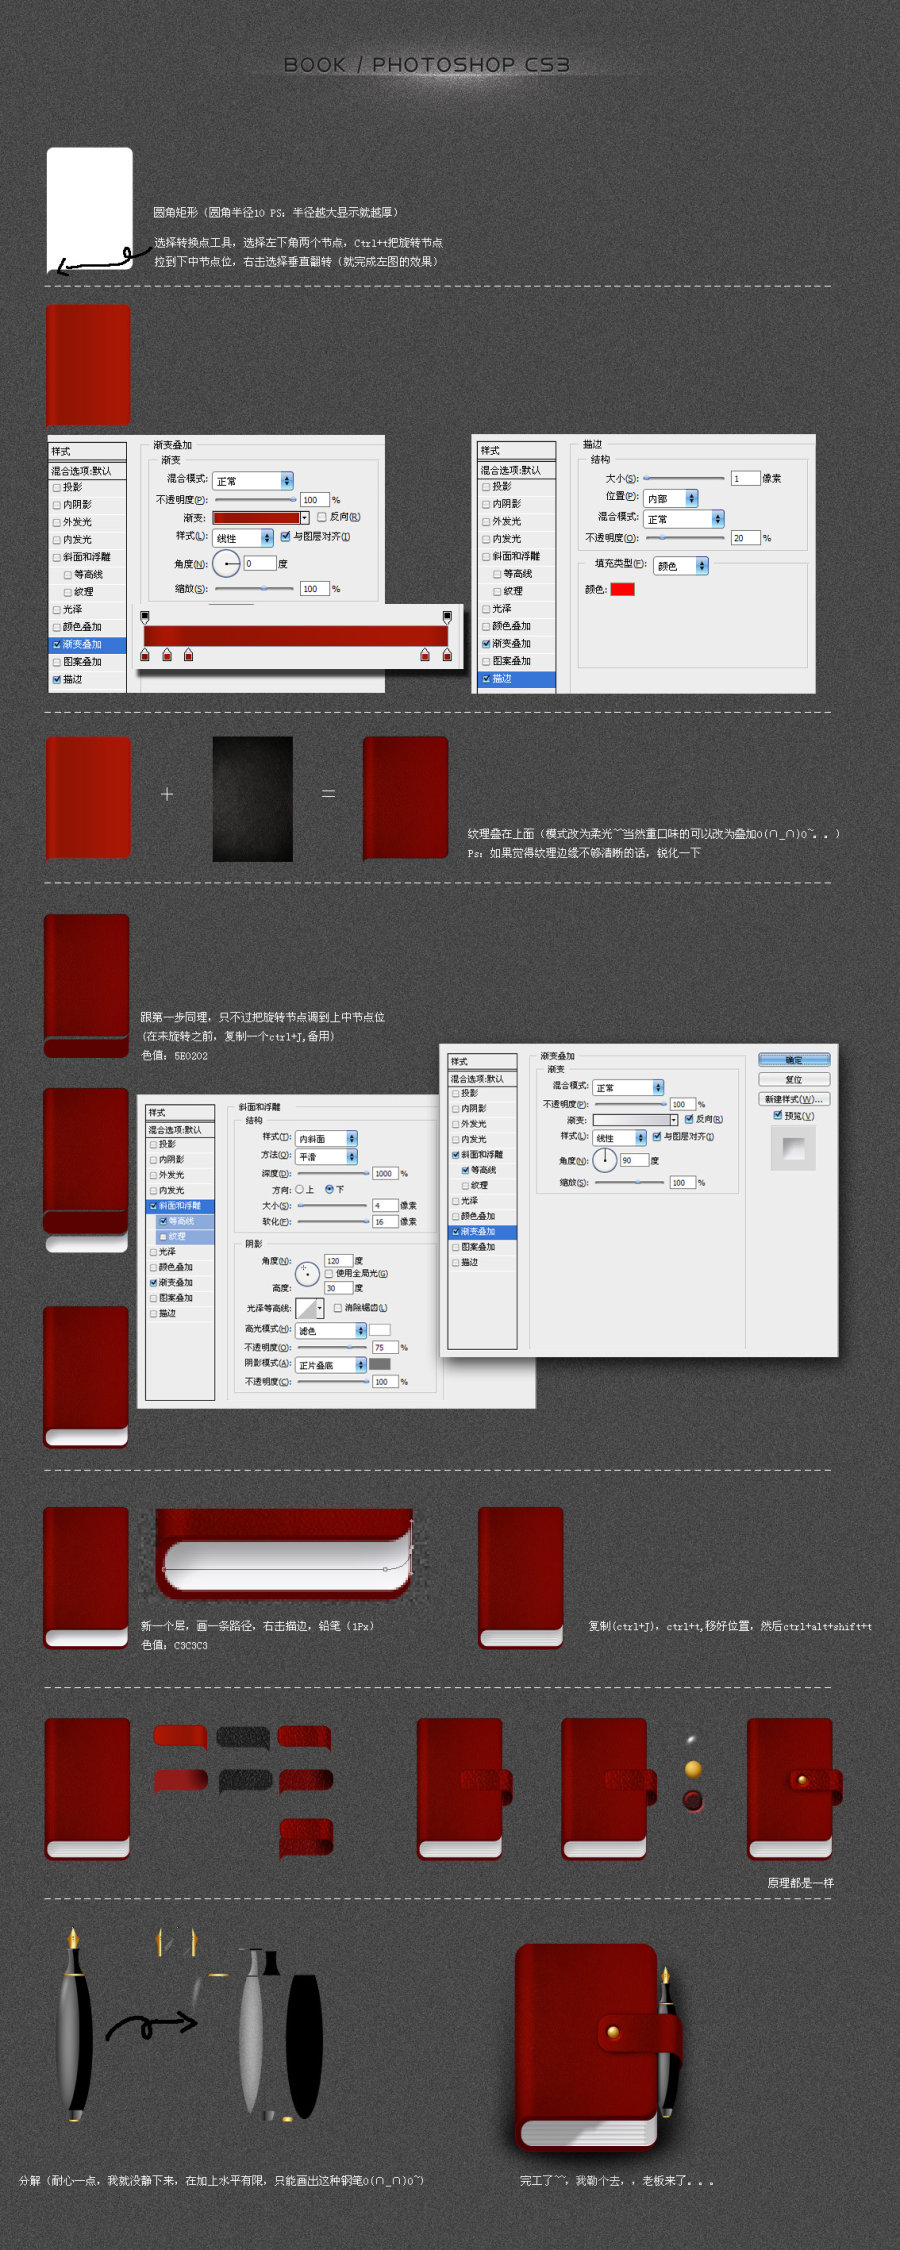 PhotoShop绘制夹着钢笔的红色记事本图标教程1